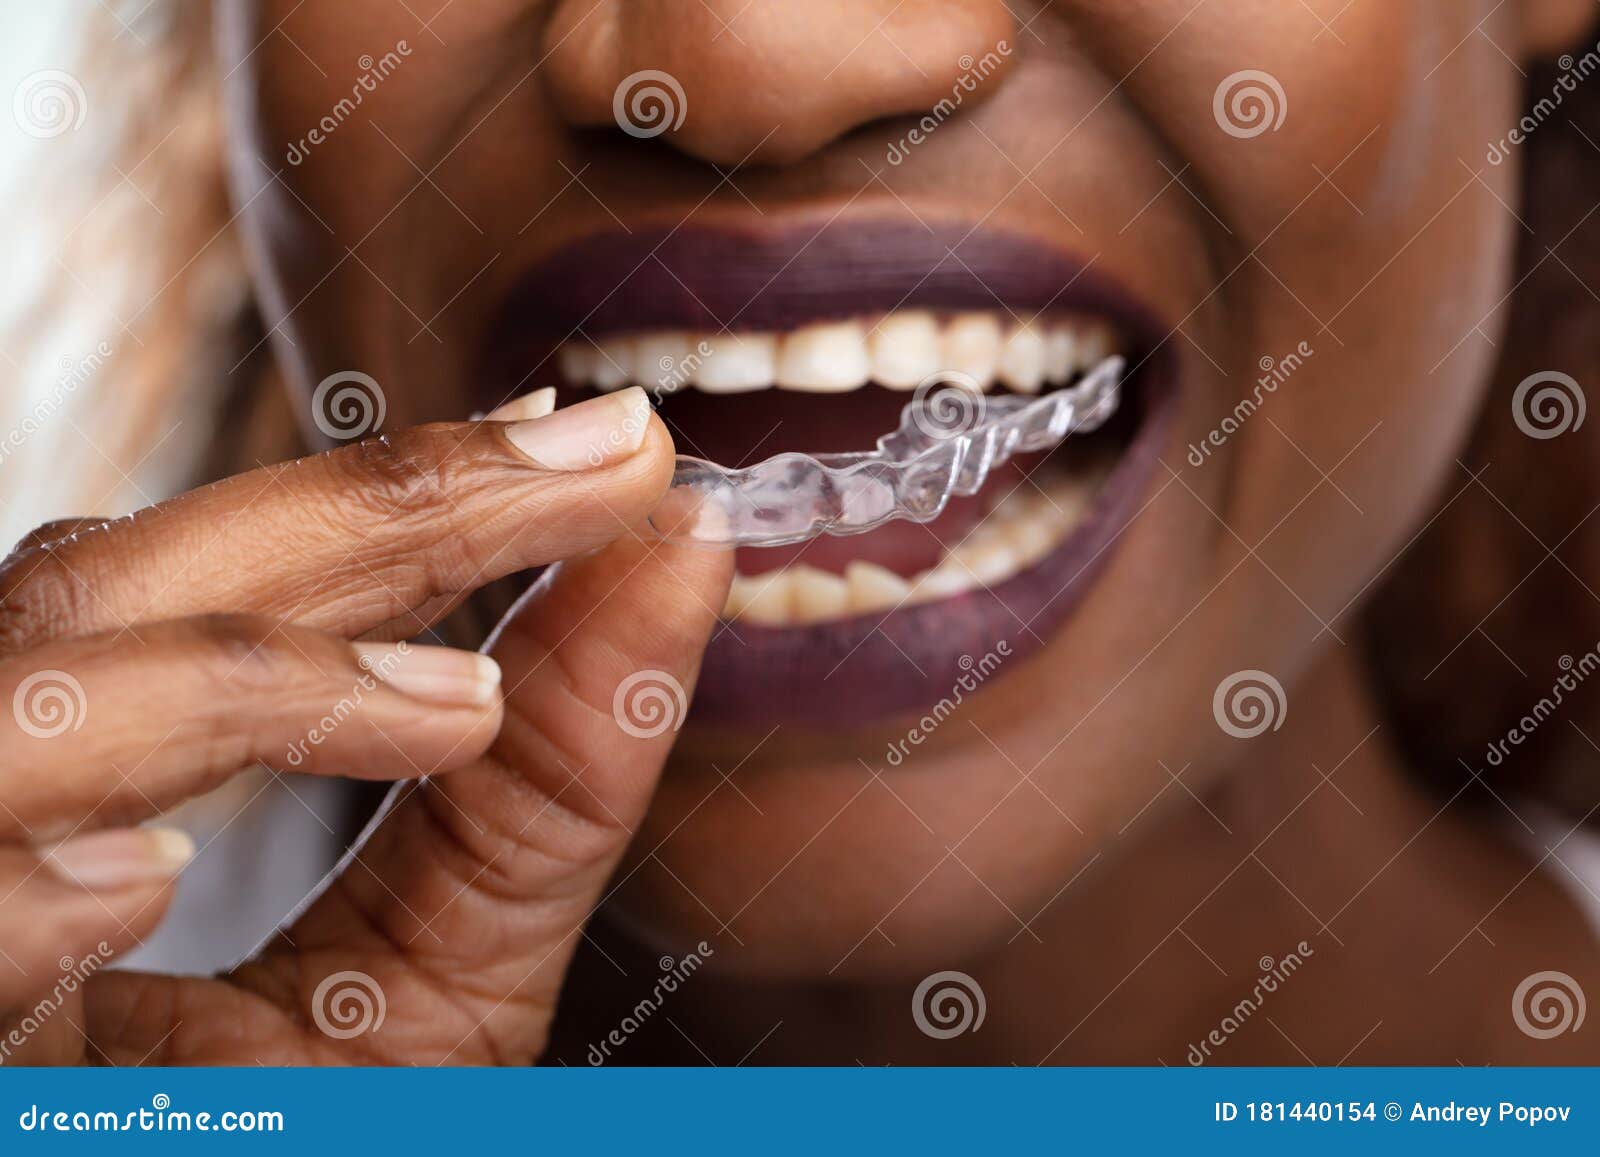 woman putting transparent aligner in teeth